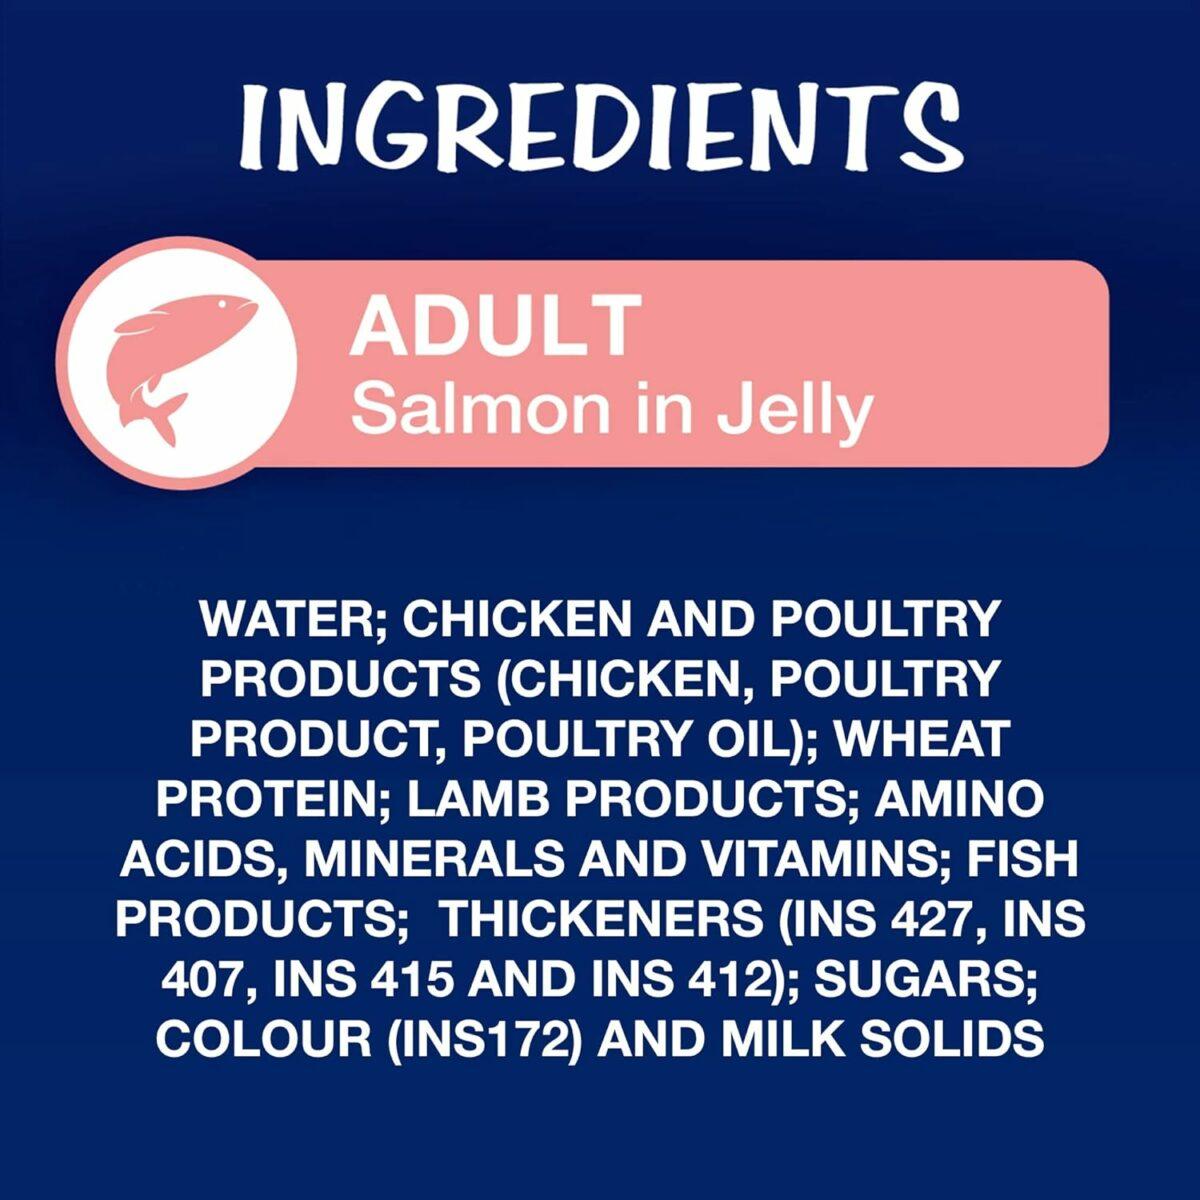 Purina Felix Salmon in Jelly Wet Cat Food